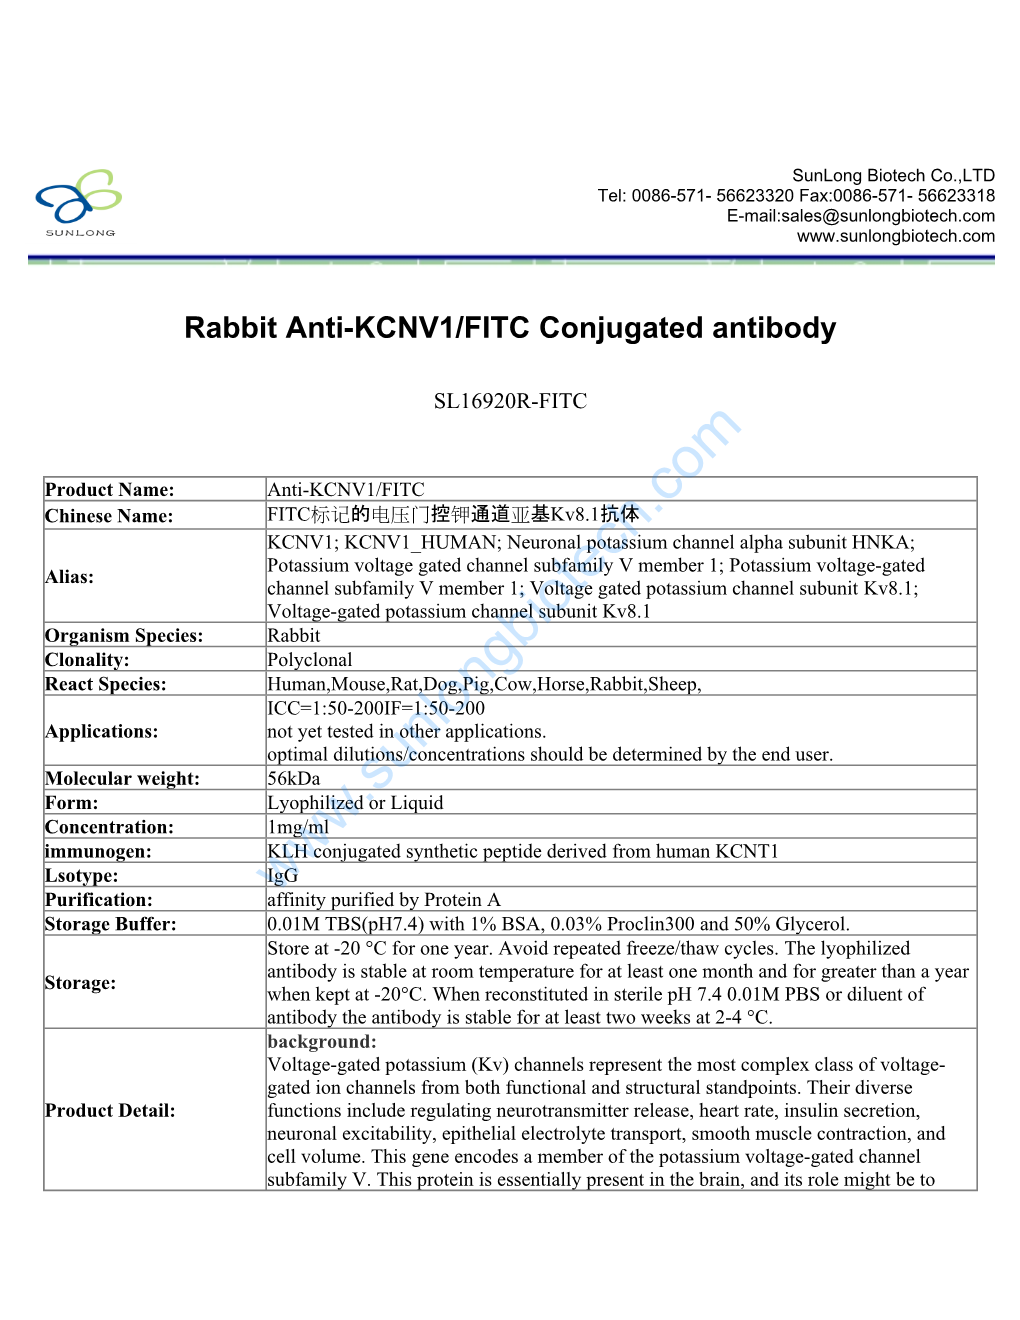 Rabbit Anti-KCNV1/FITC Conjugated Antibody